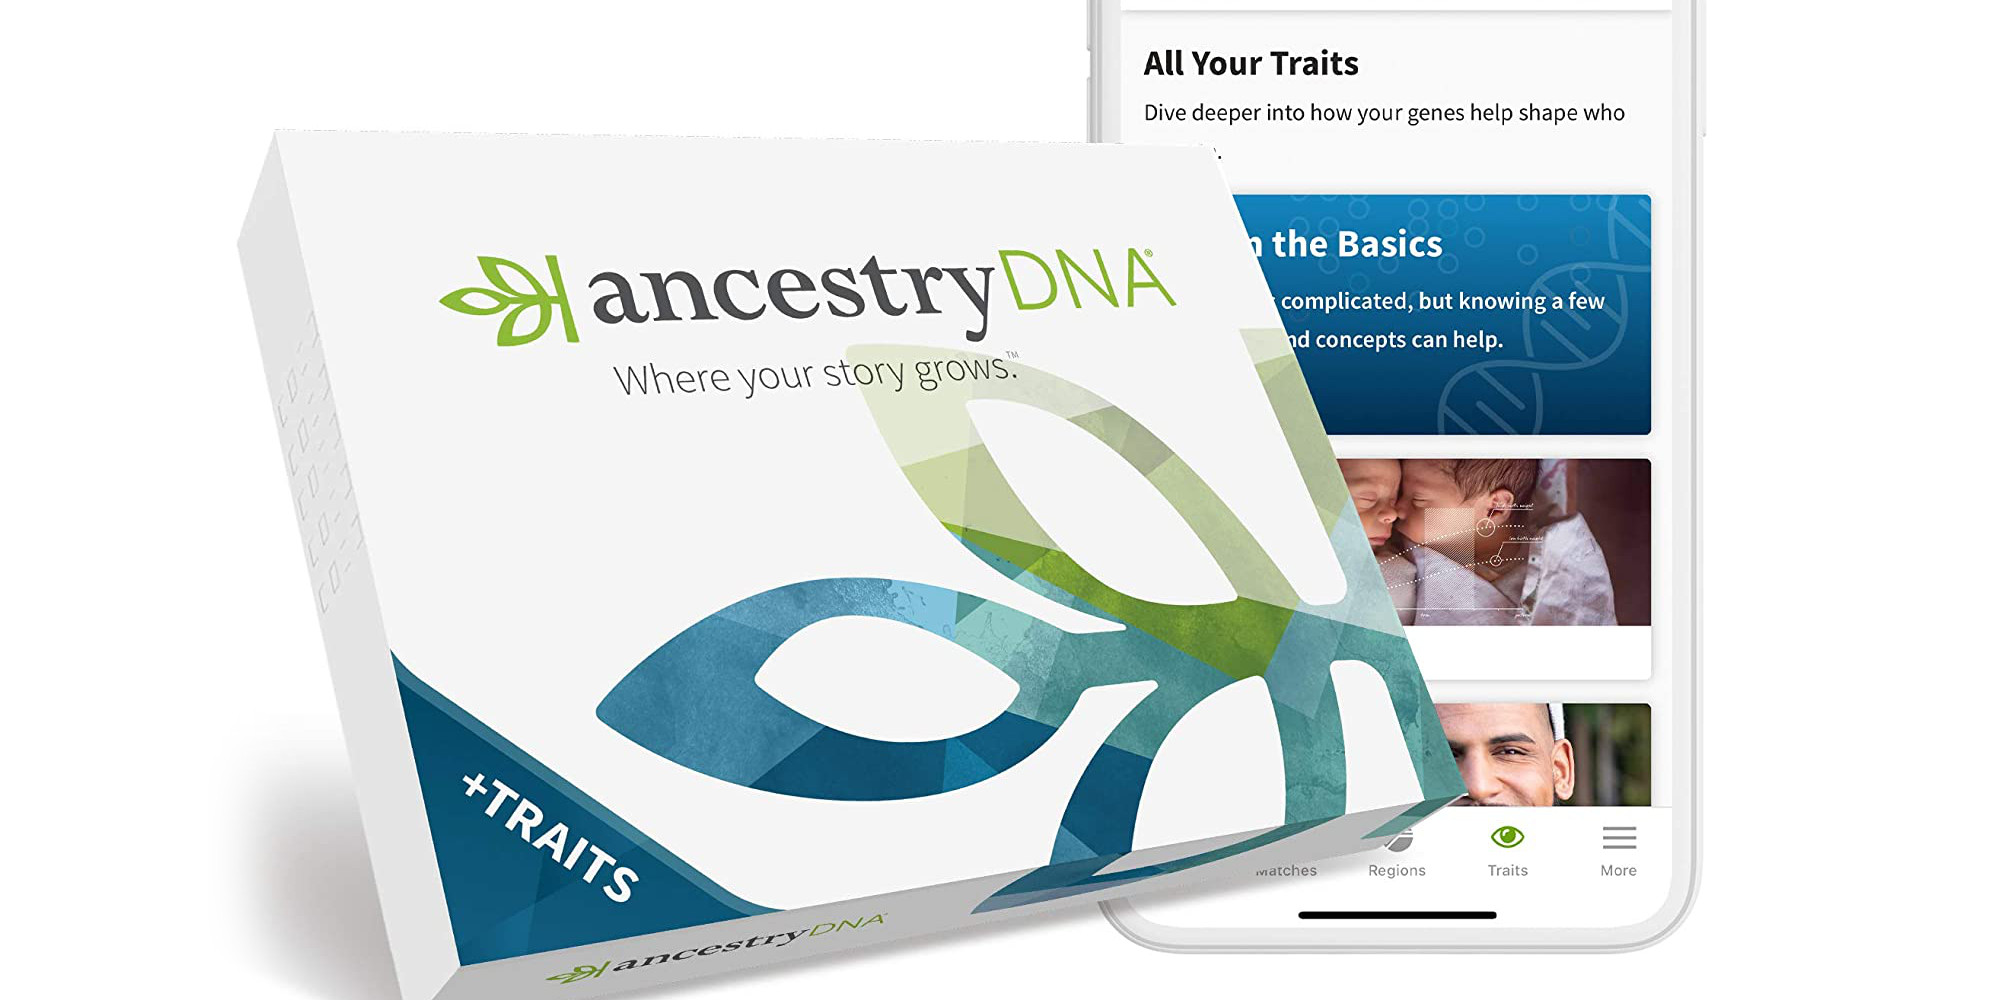 1. AncestryDNA: Genetic Testing - wide 2